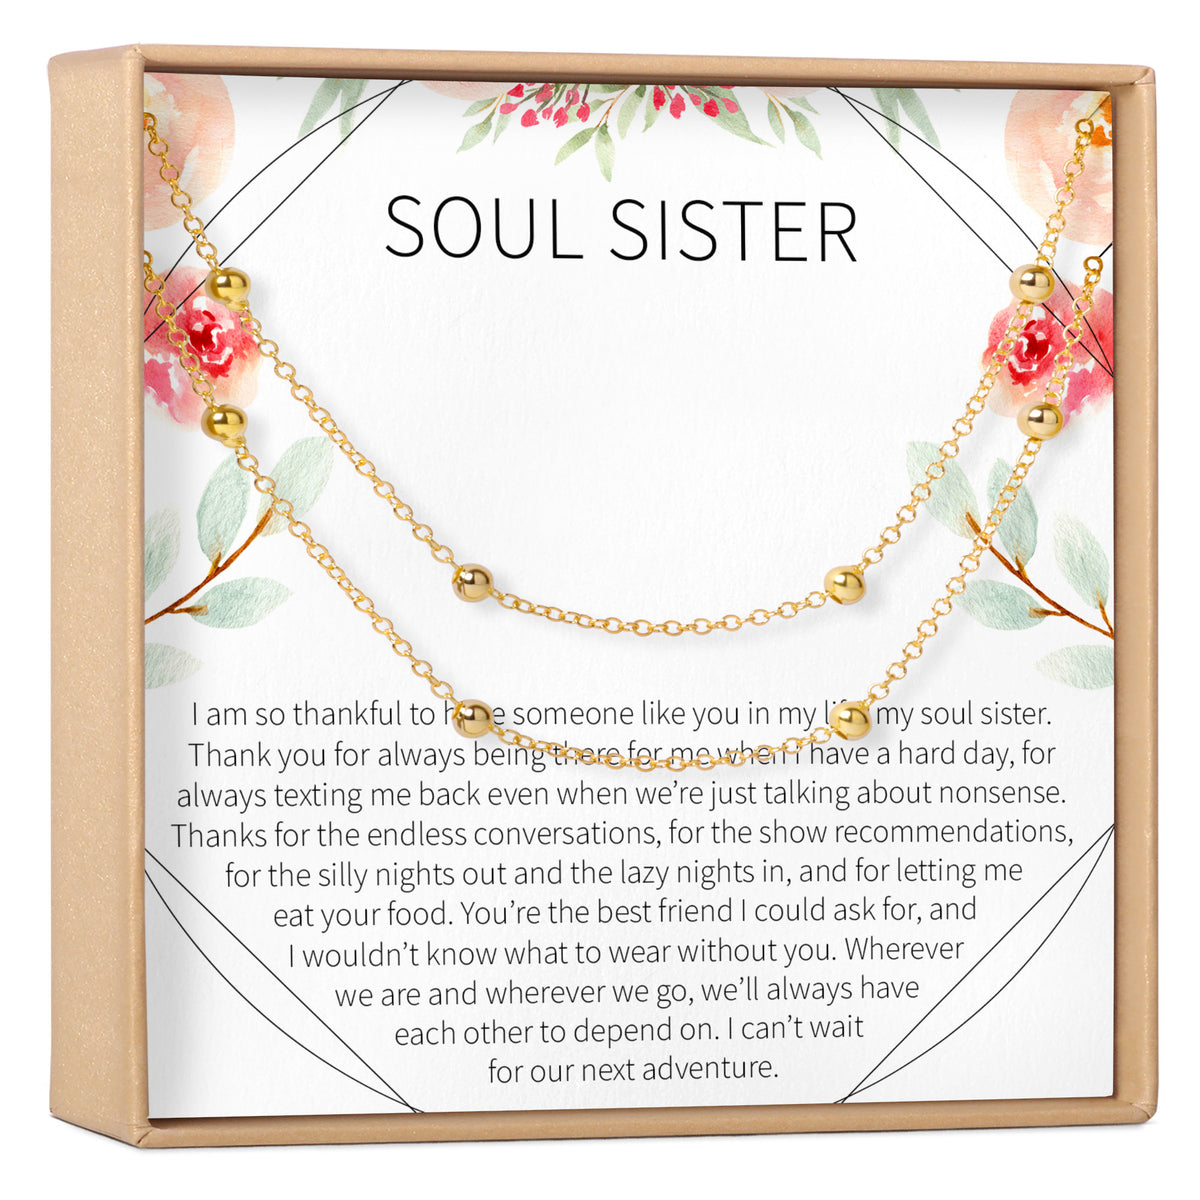 Soul Sisters Bracelet